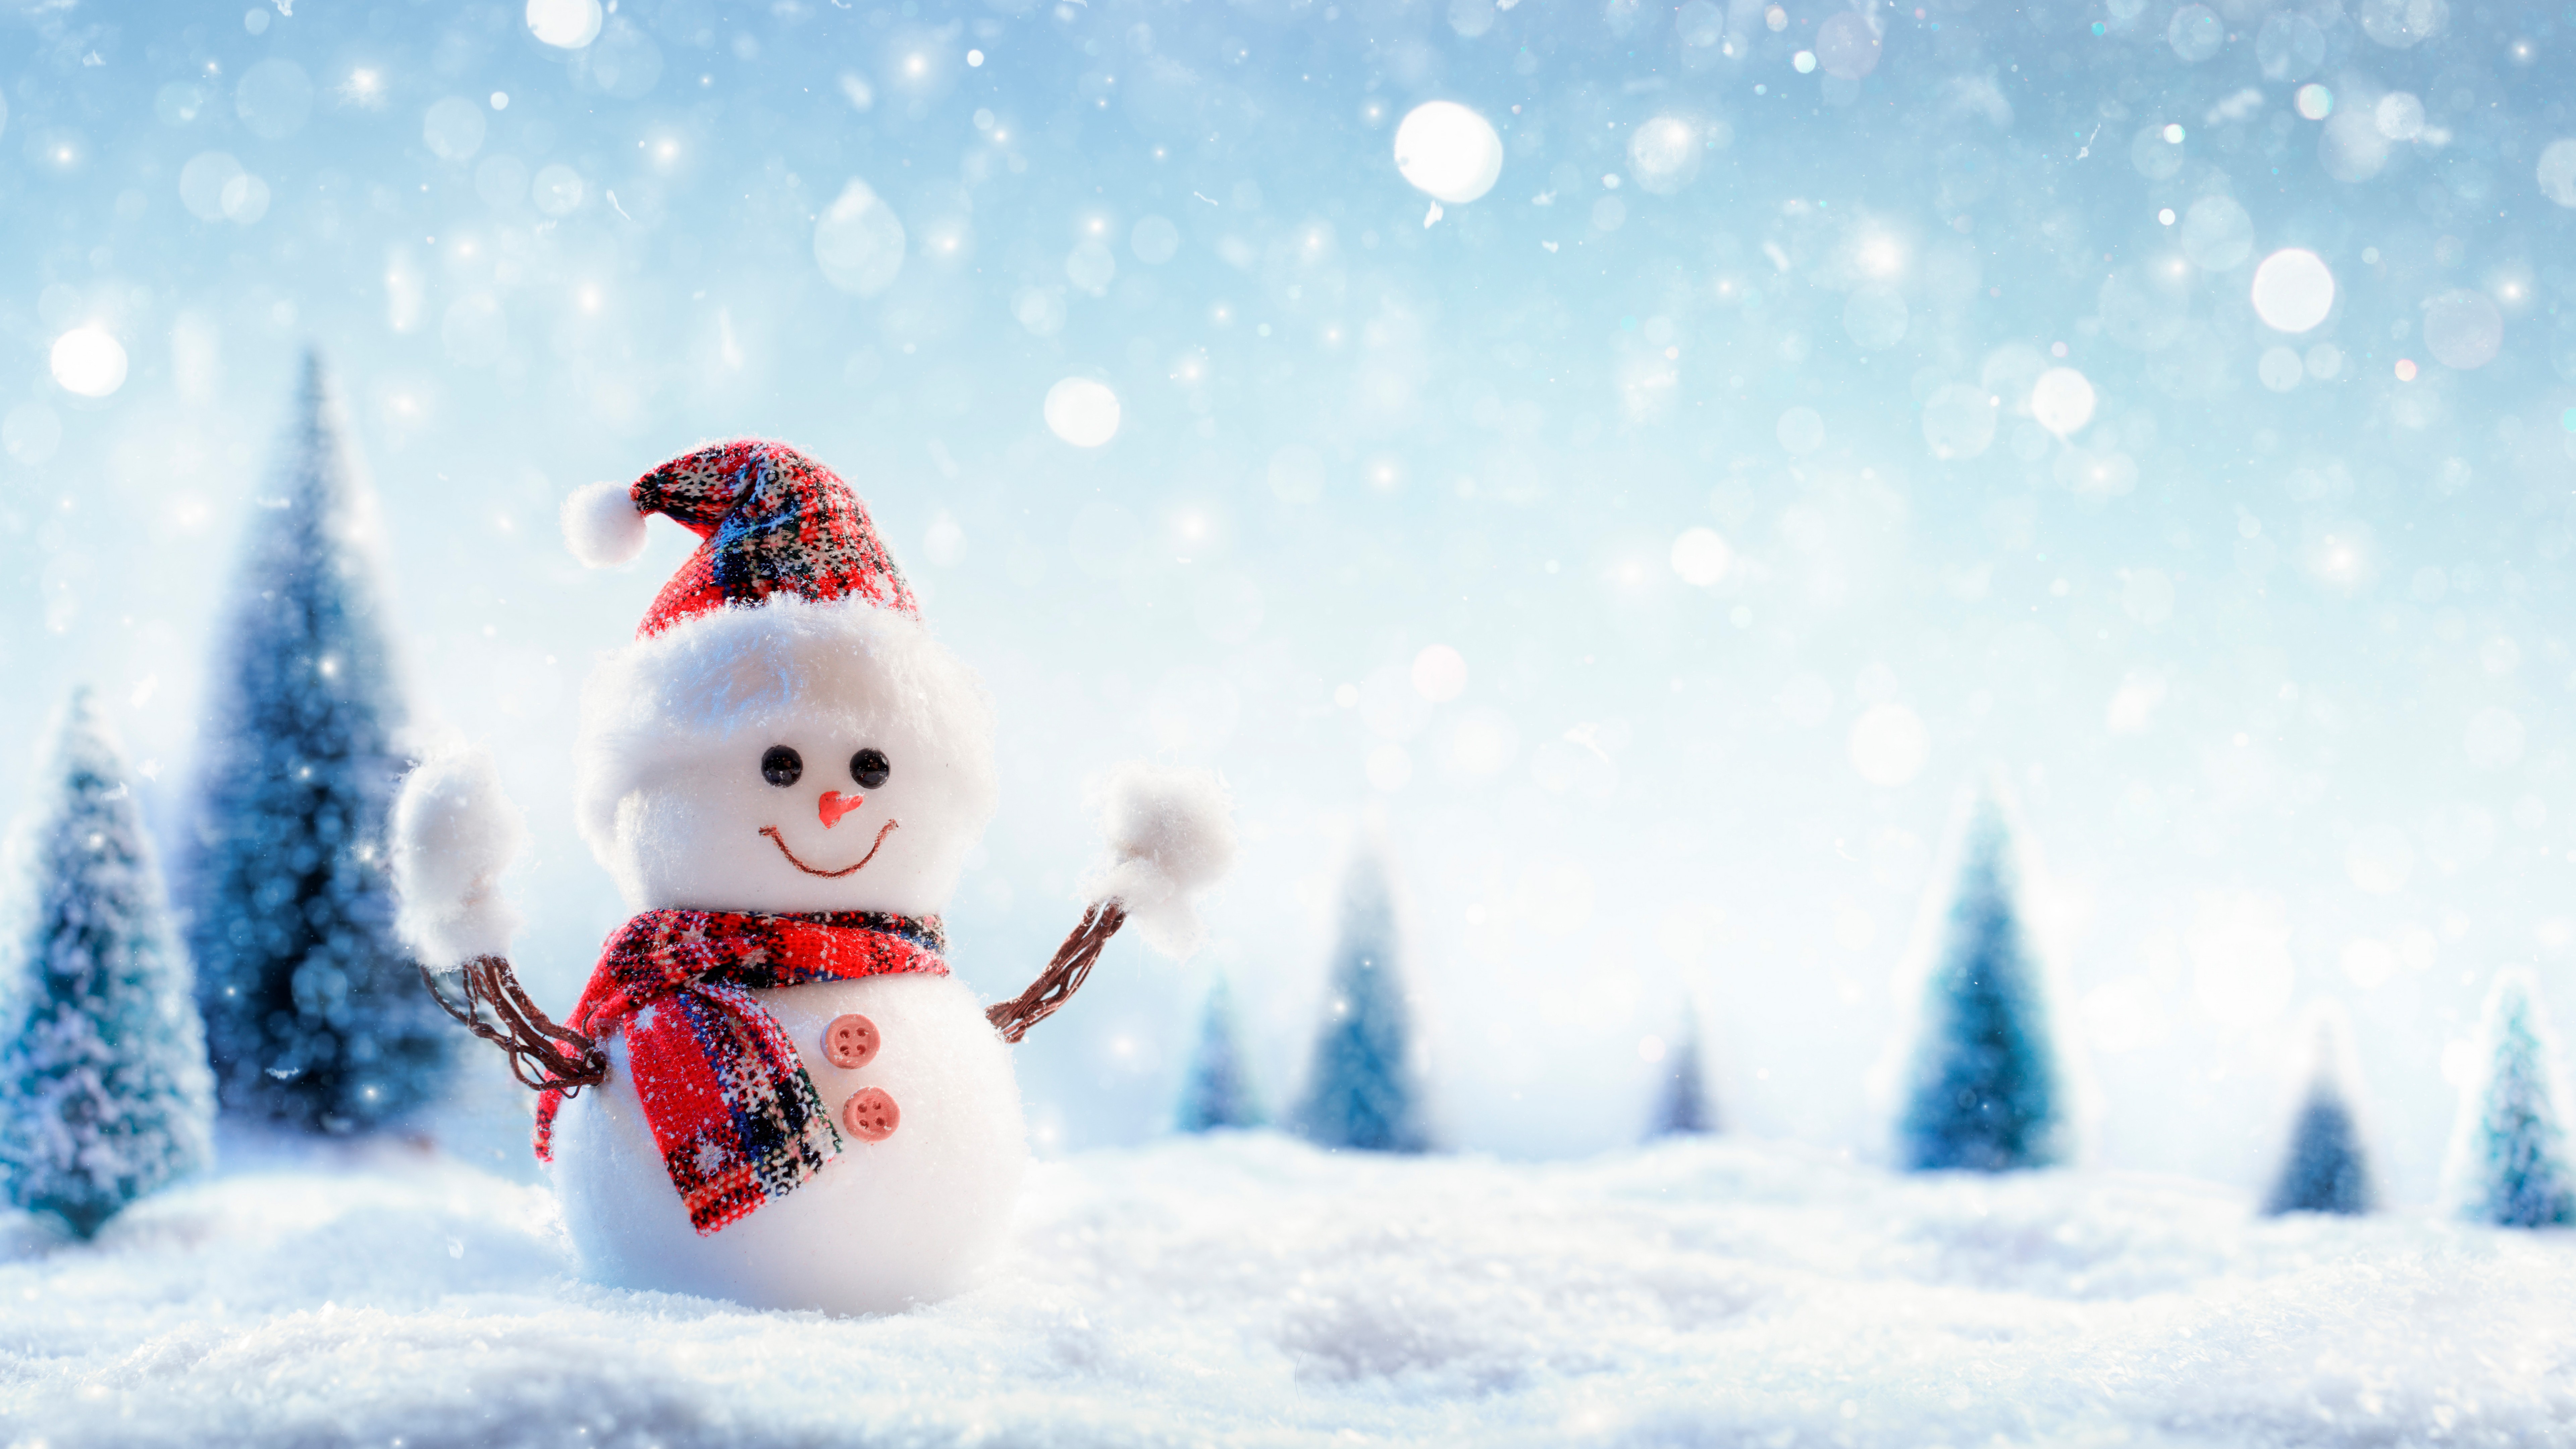 Wallpaper Christmas, New Year, snow, winter, snowman, 8k, Holidays #17146